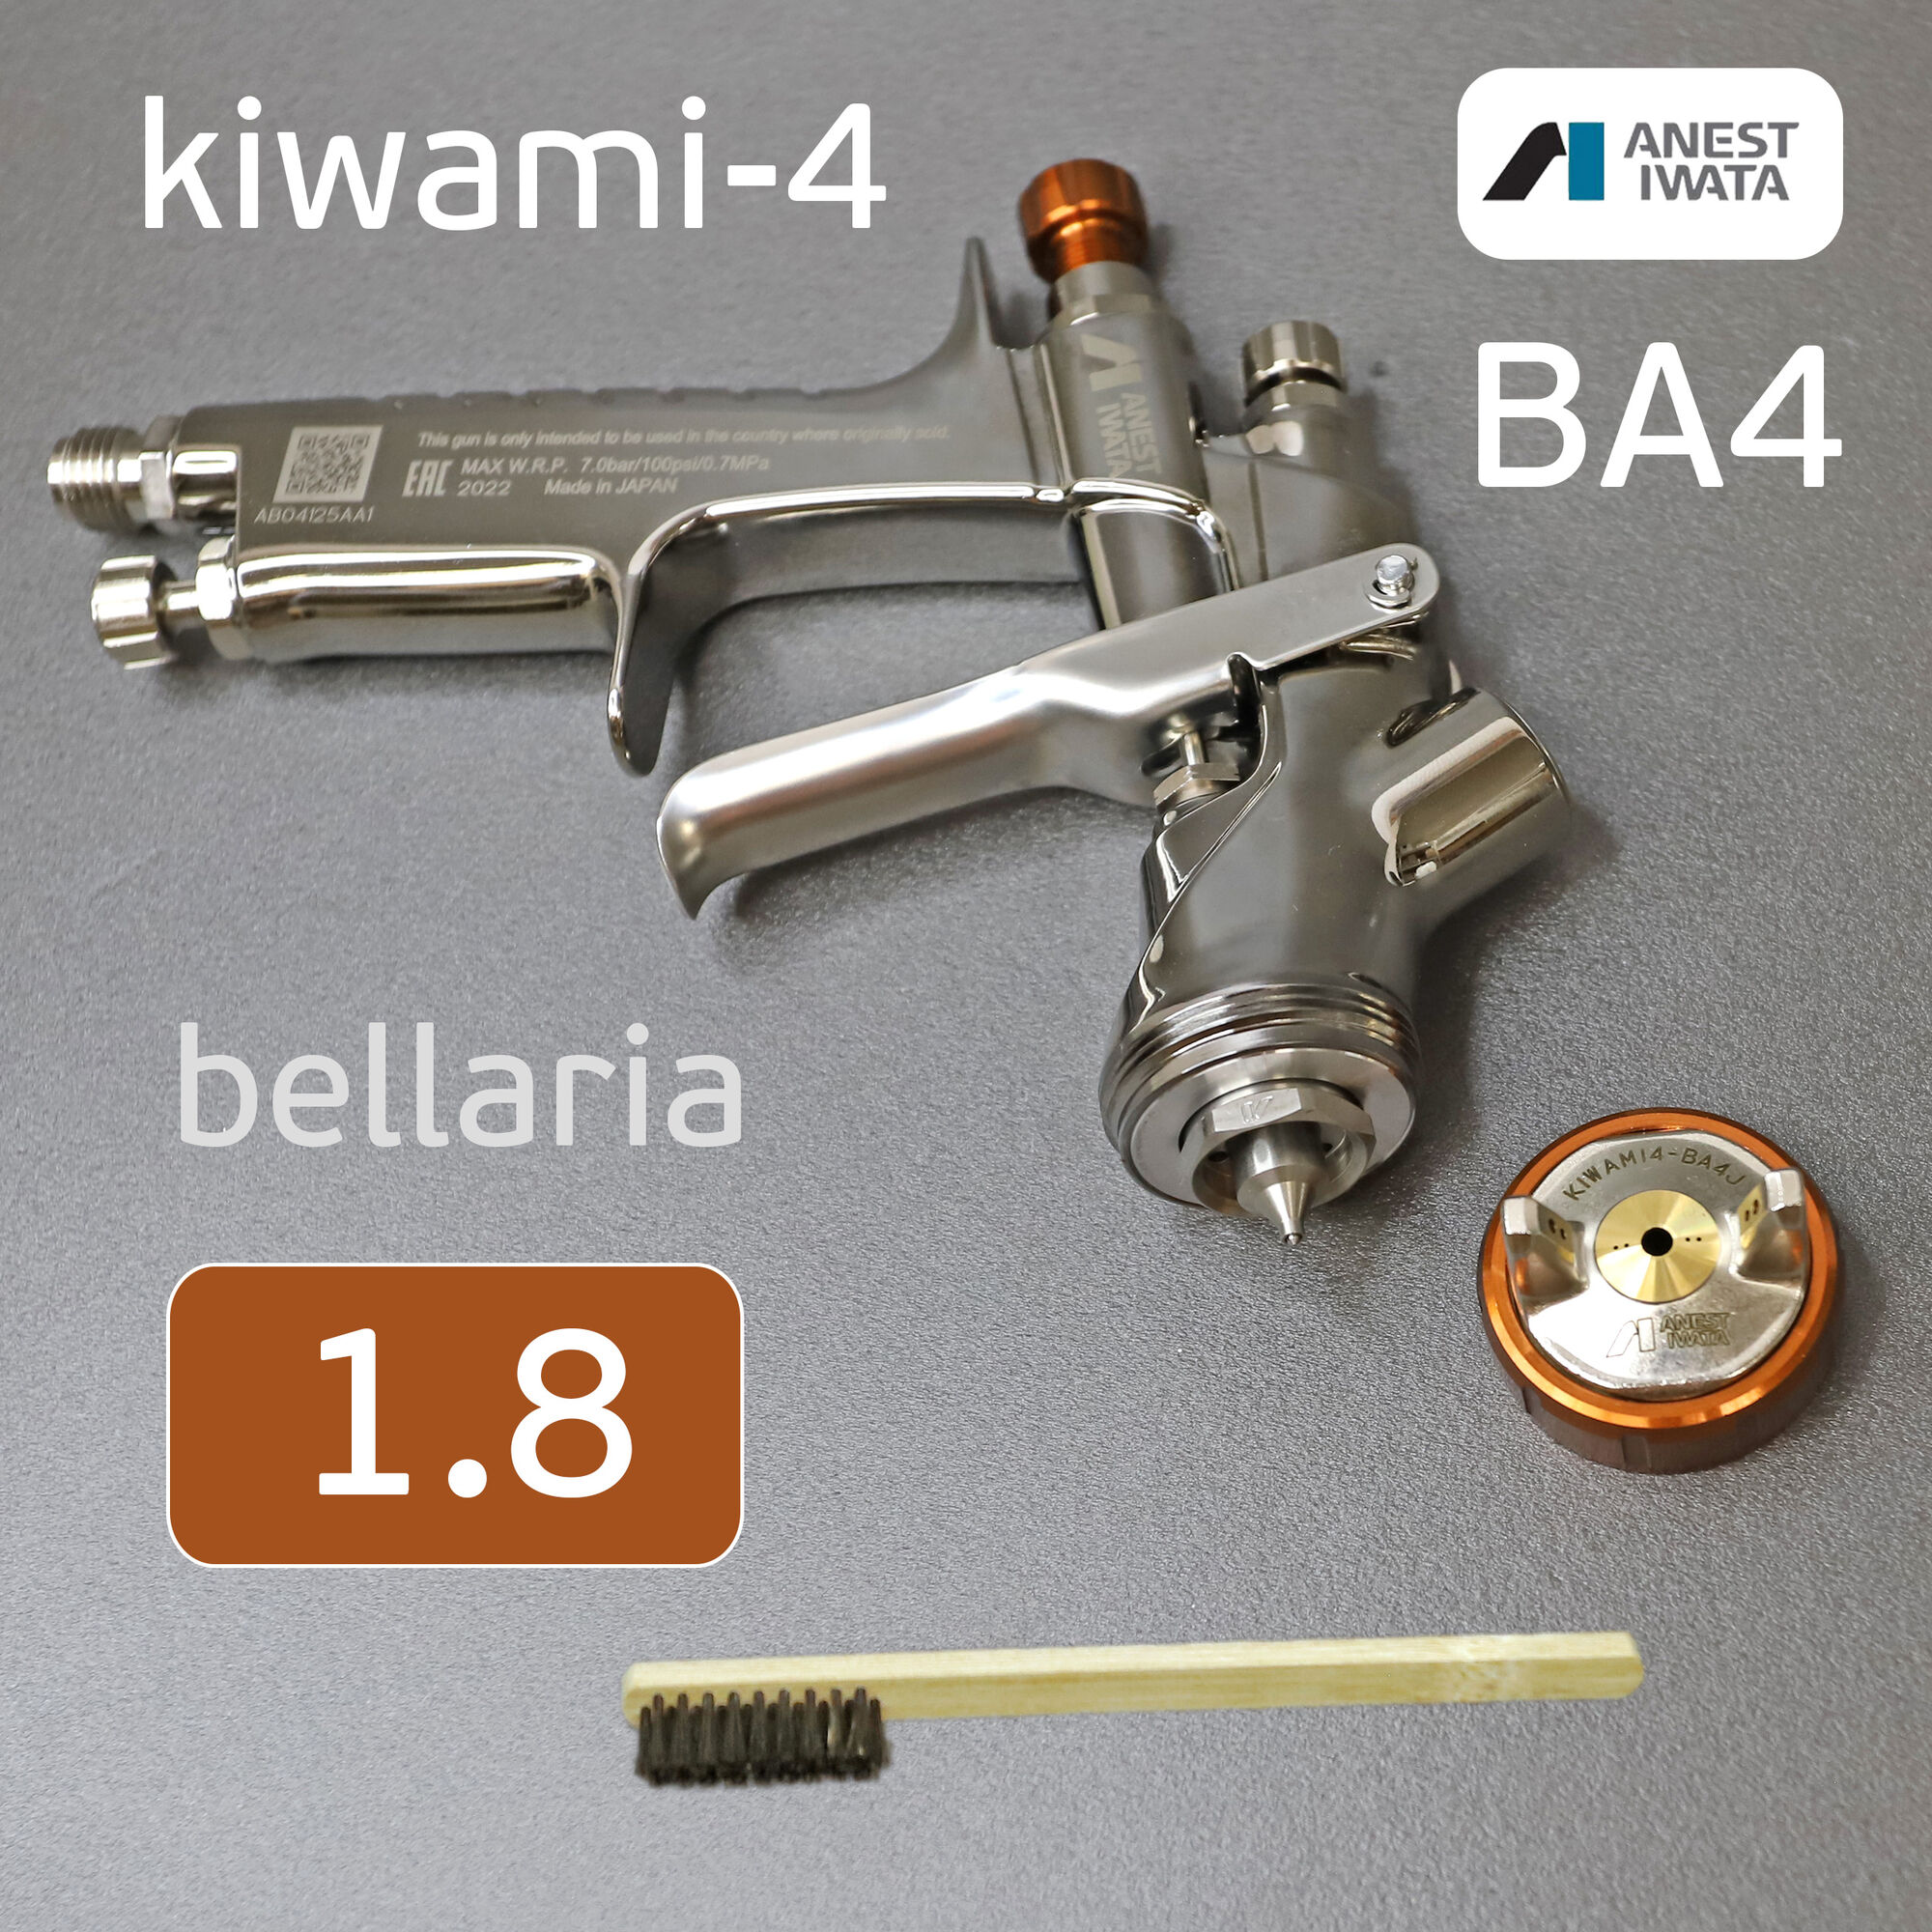 Краскопульт Anest Iwata kiwami BA4 (1.8мм) без бачка NEW W-400 Bellaria